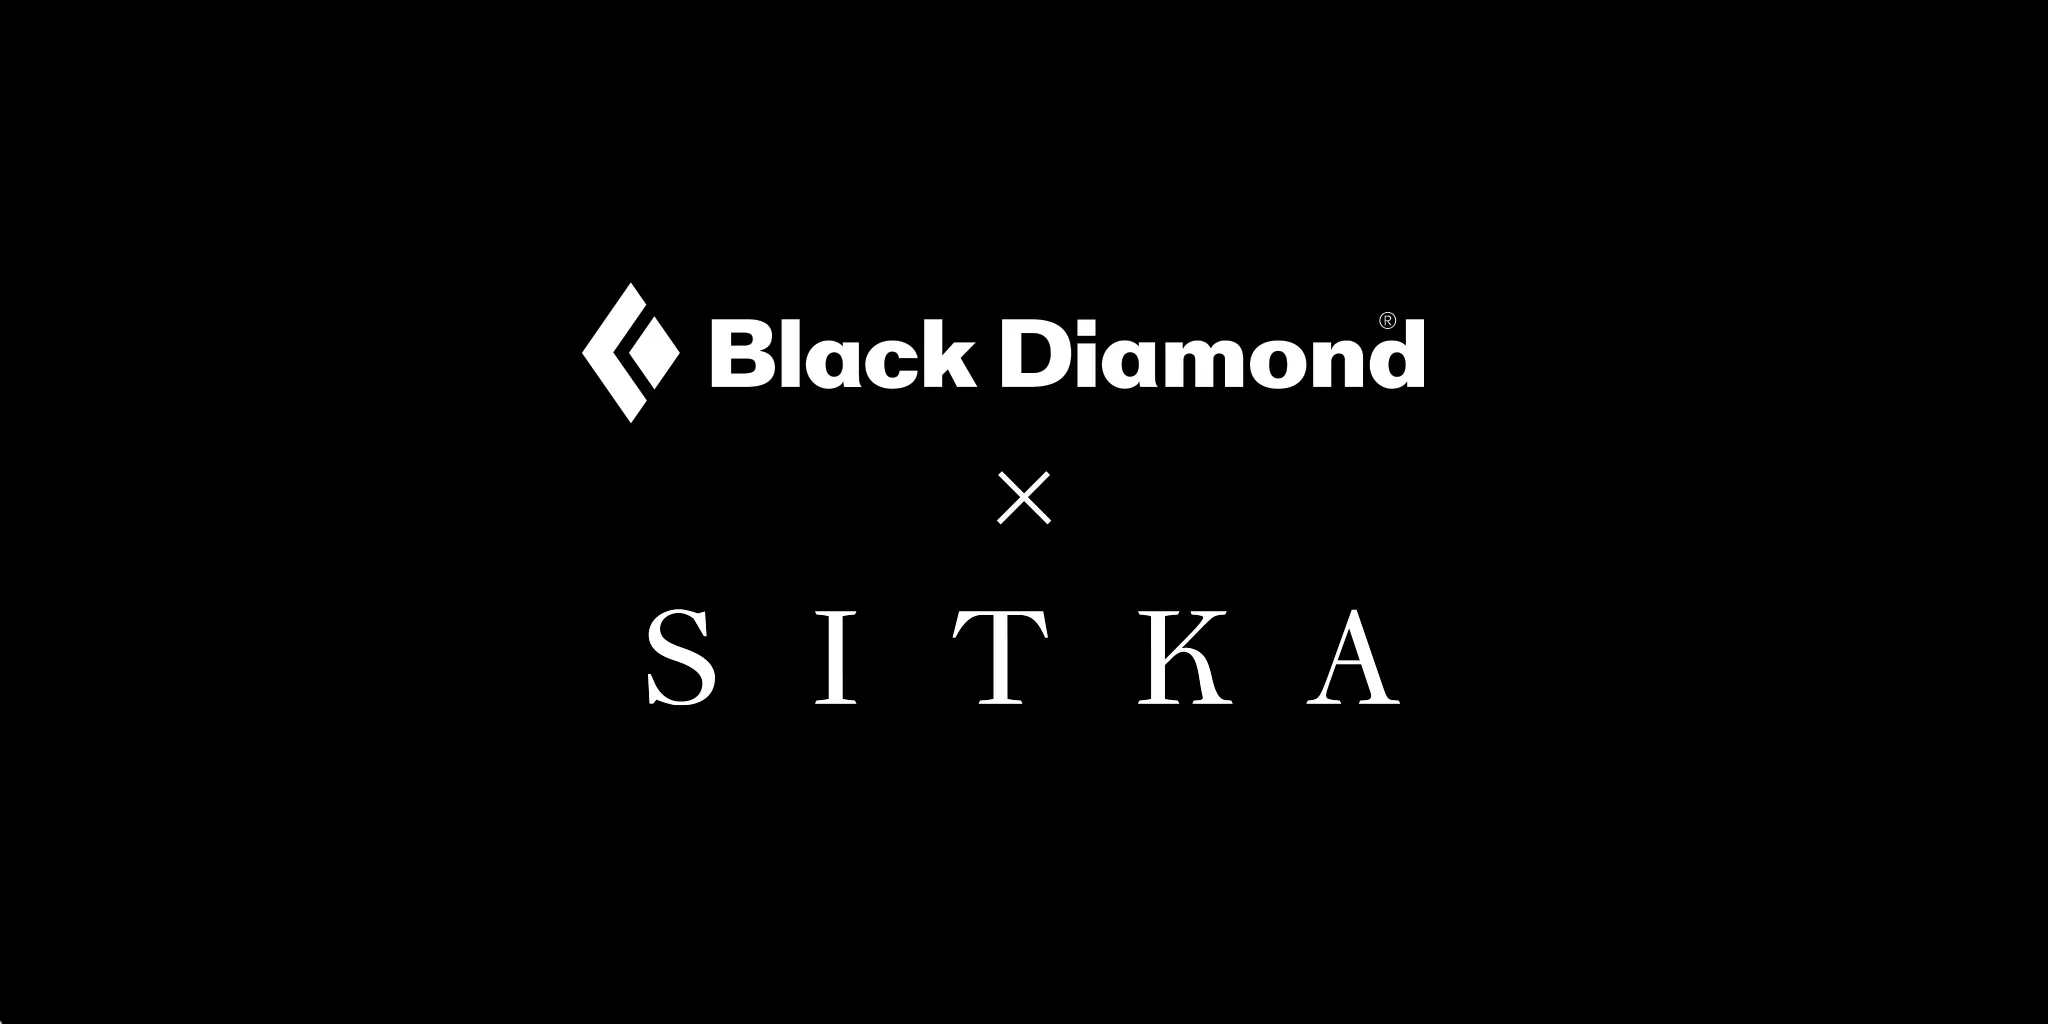 Black Diamond x SITKA